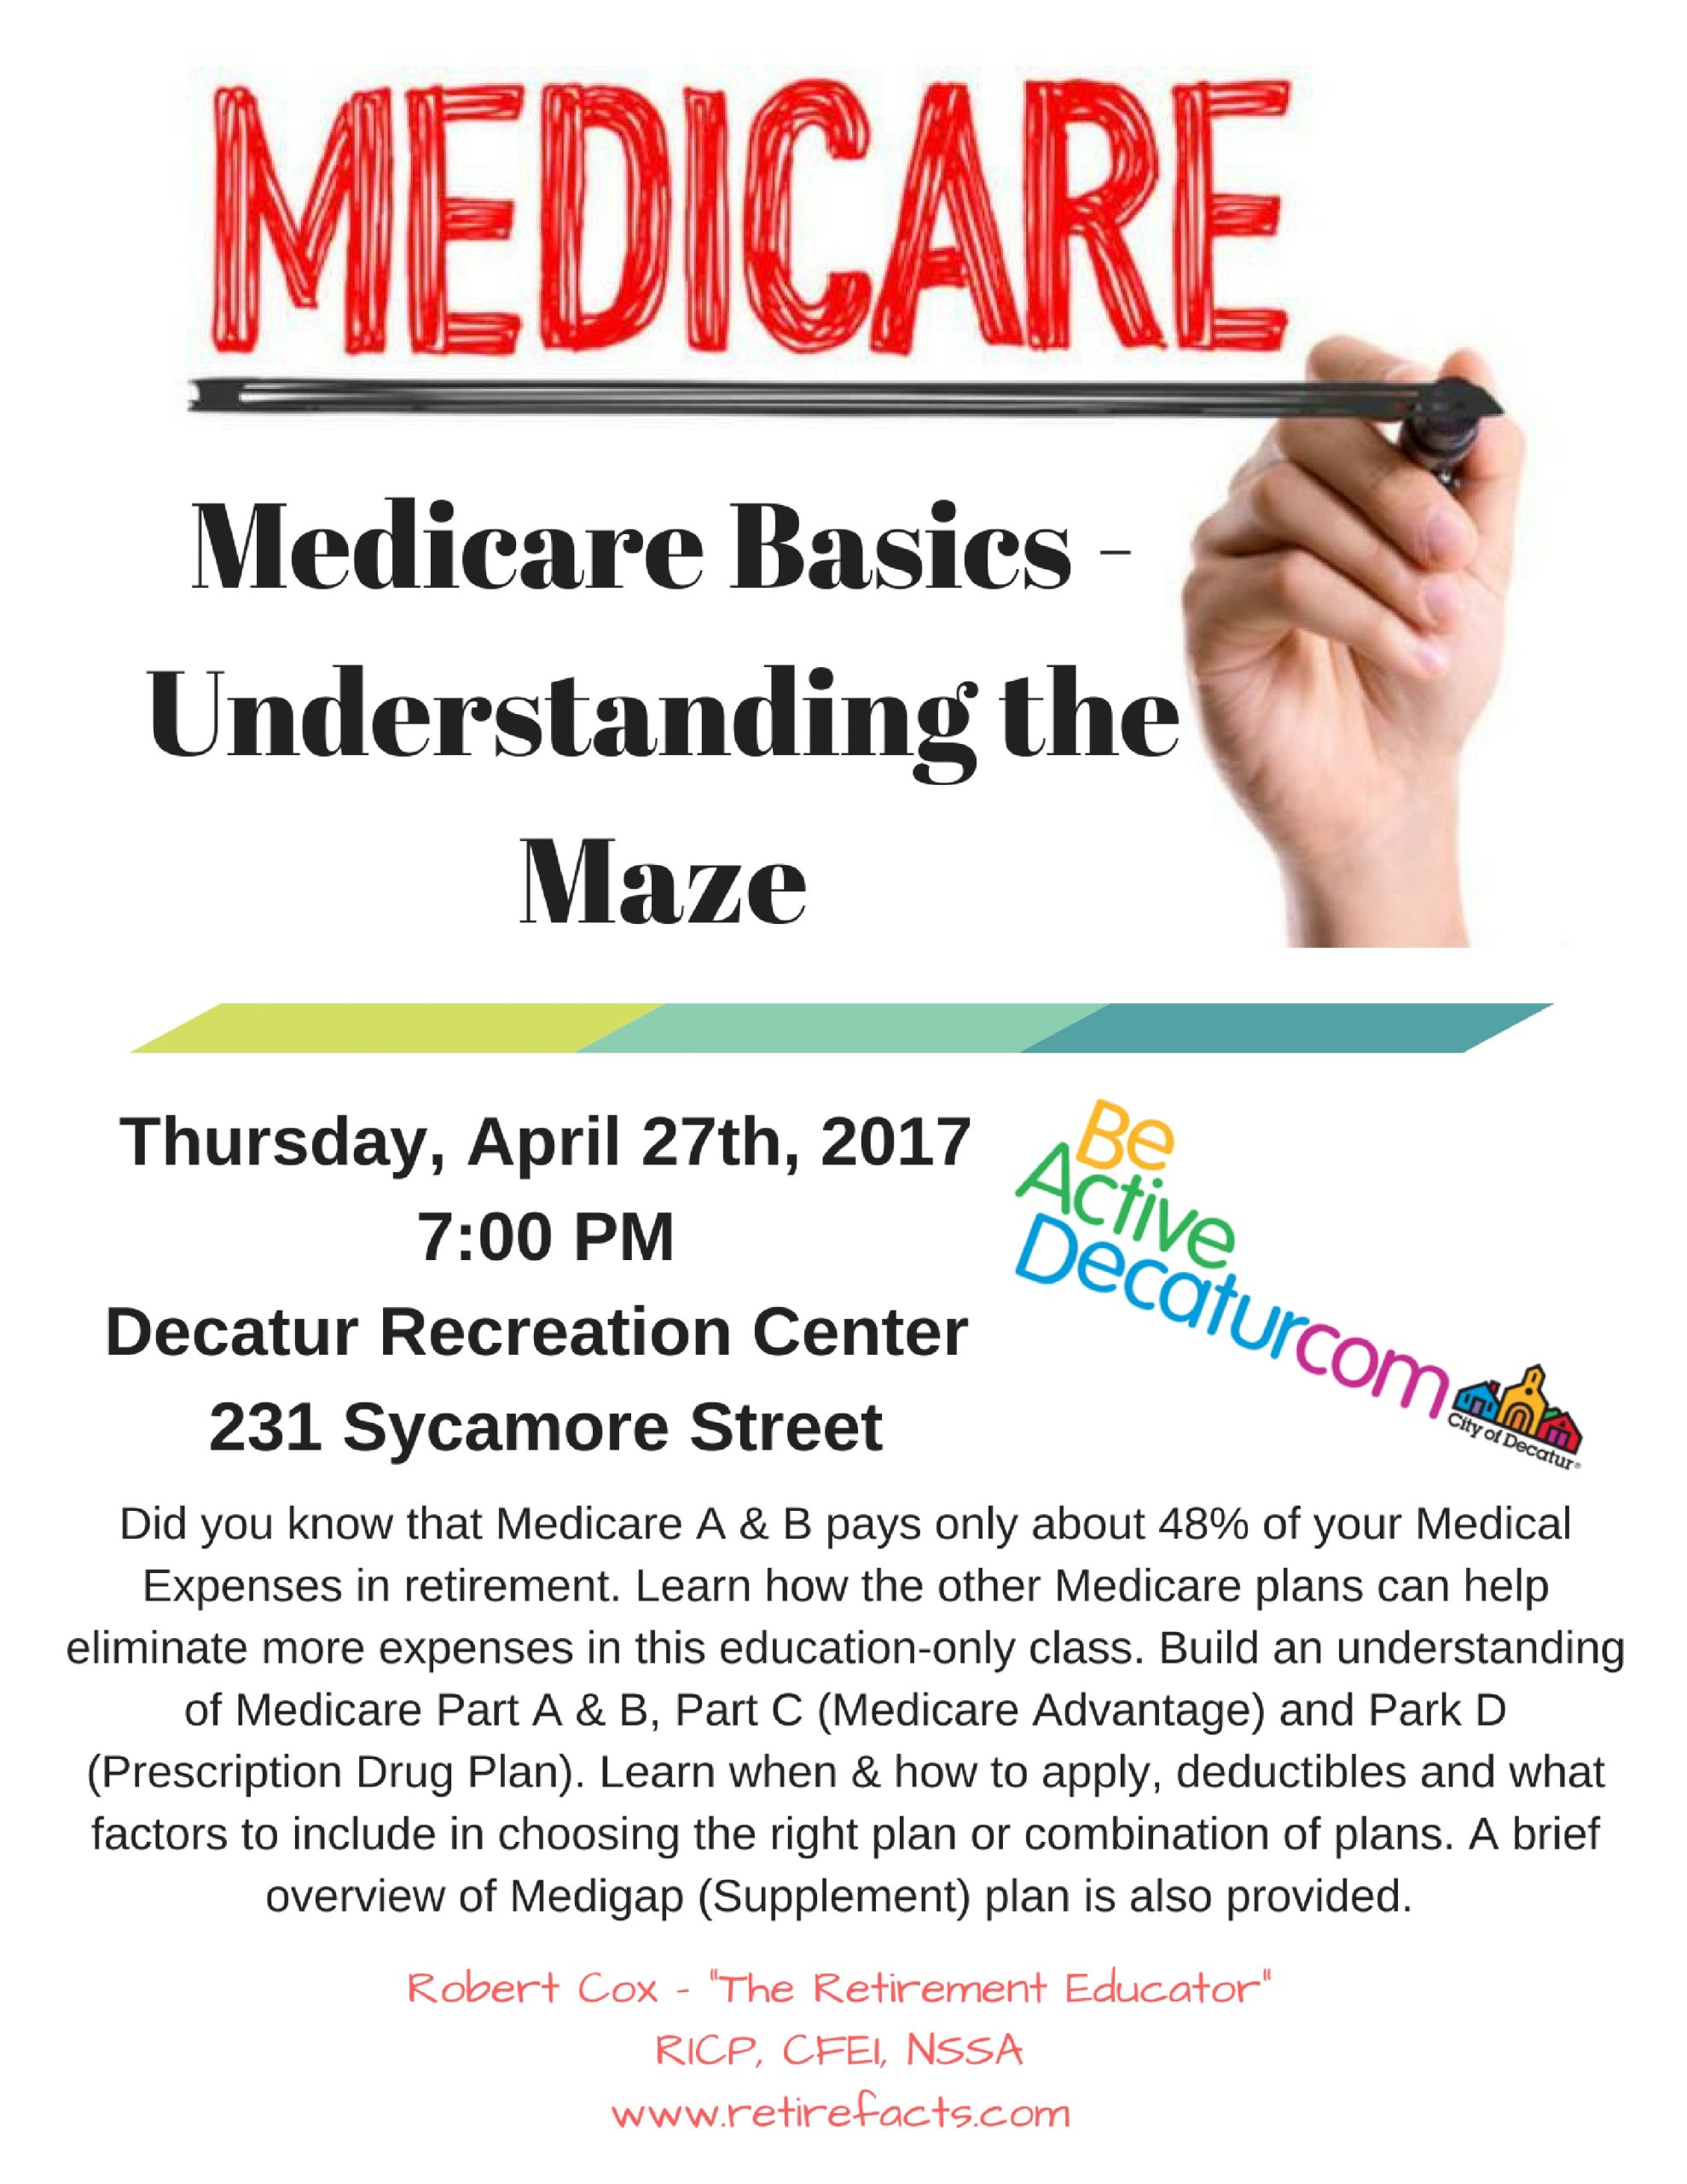 Medicare Basics Class Tonight @ 7PM!